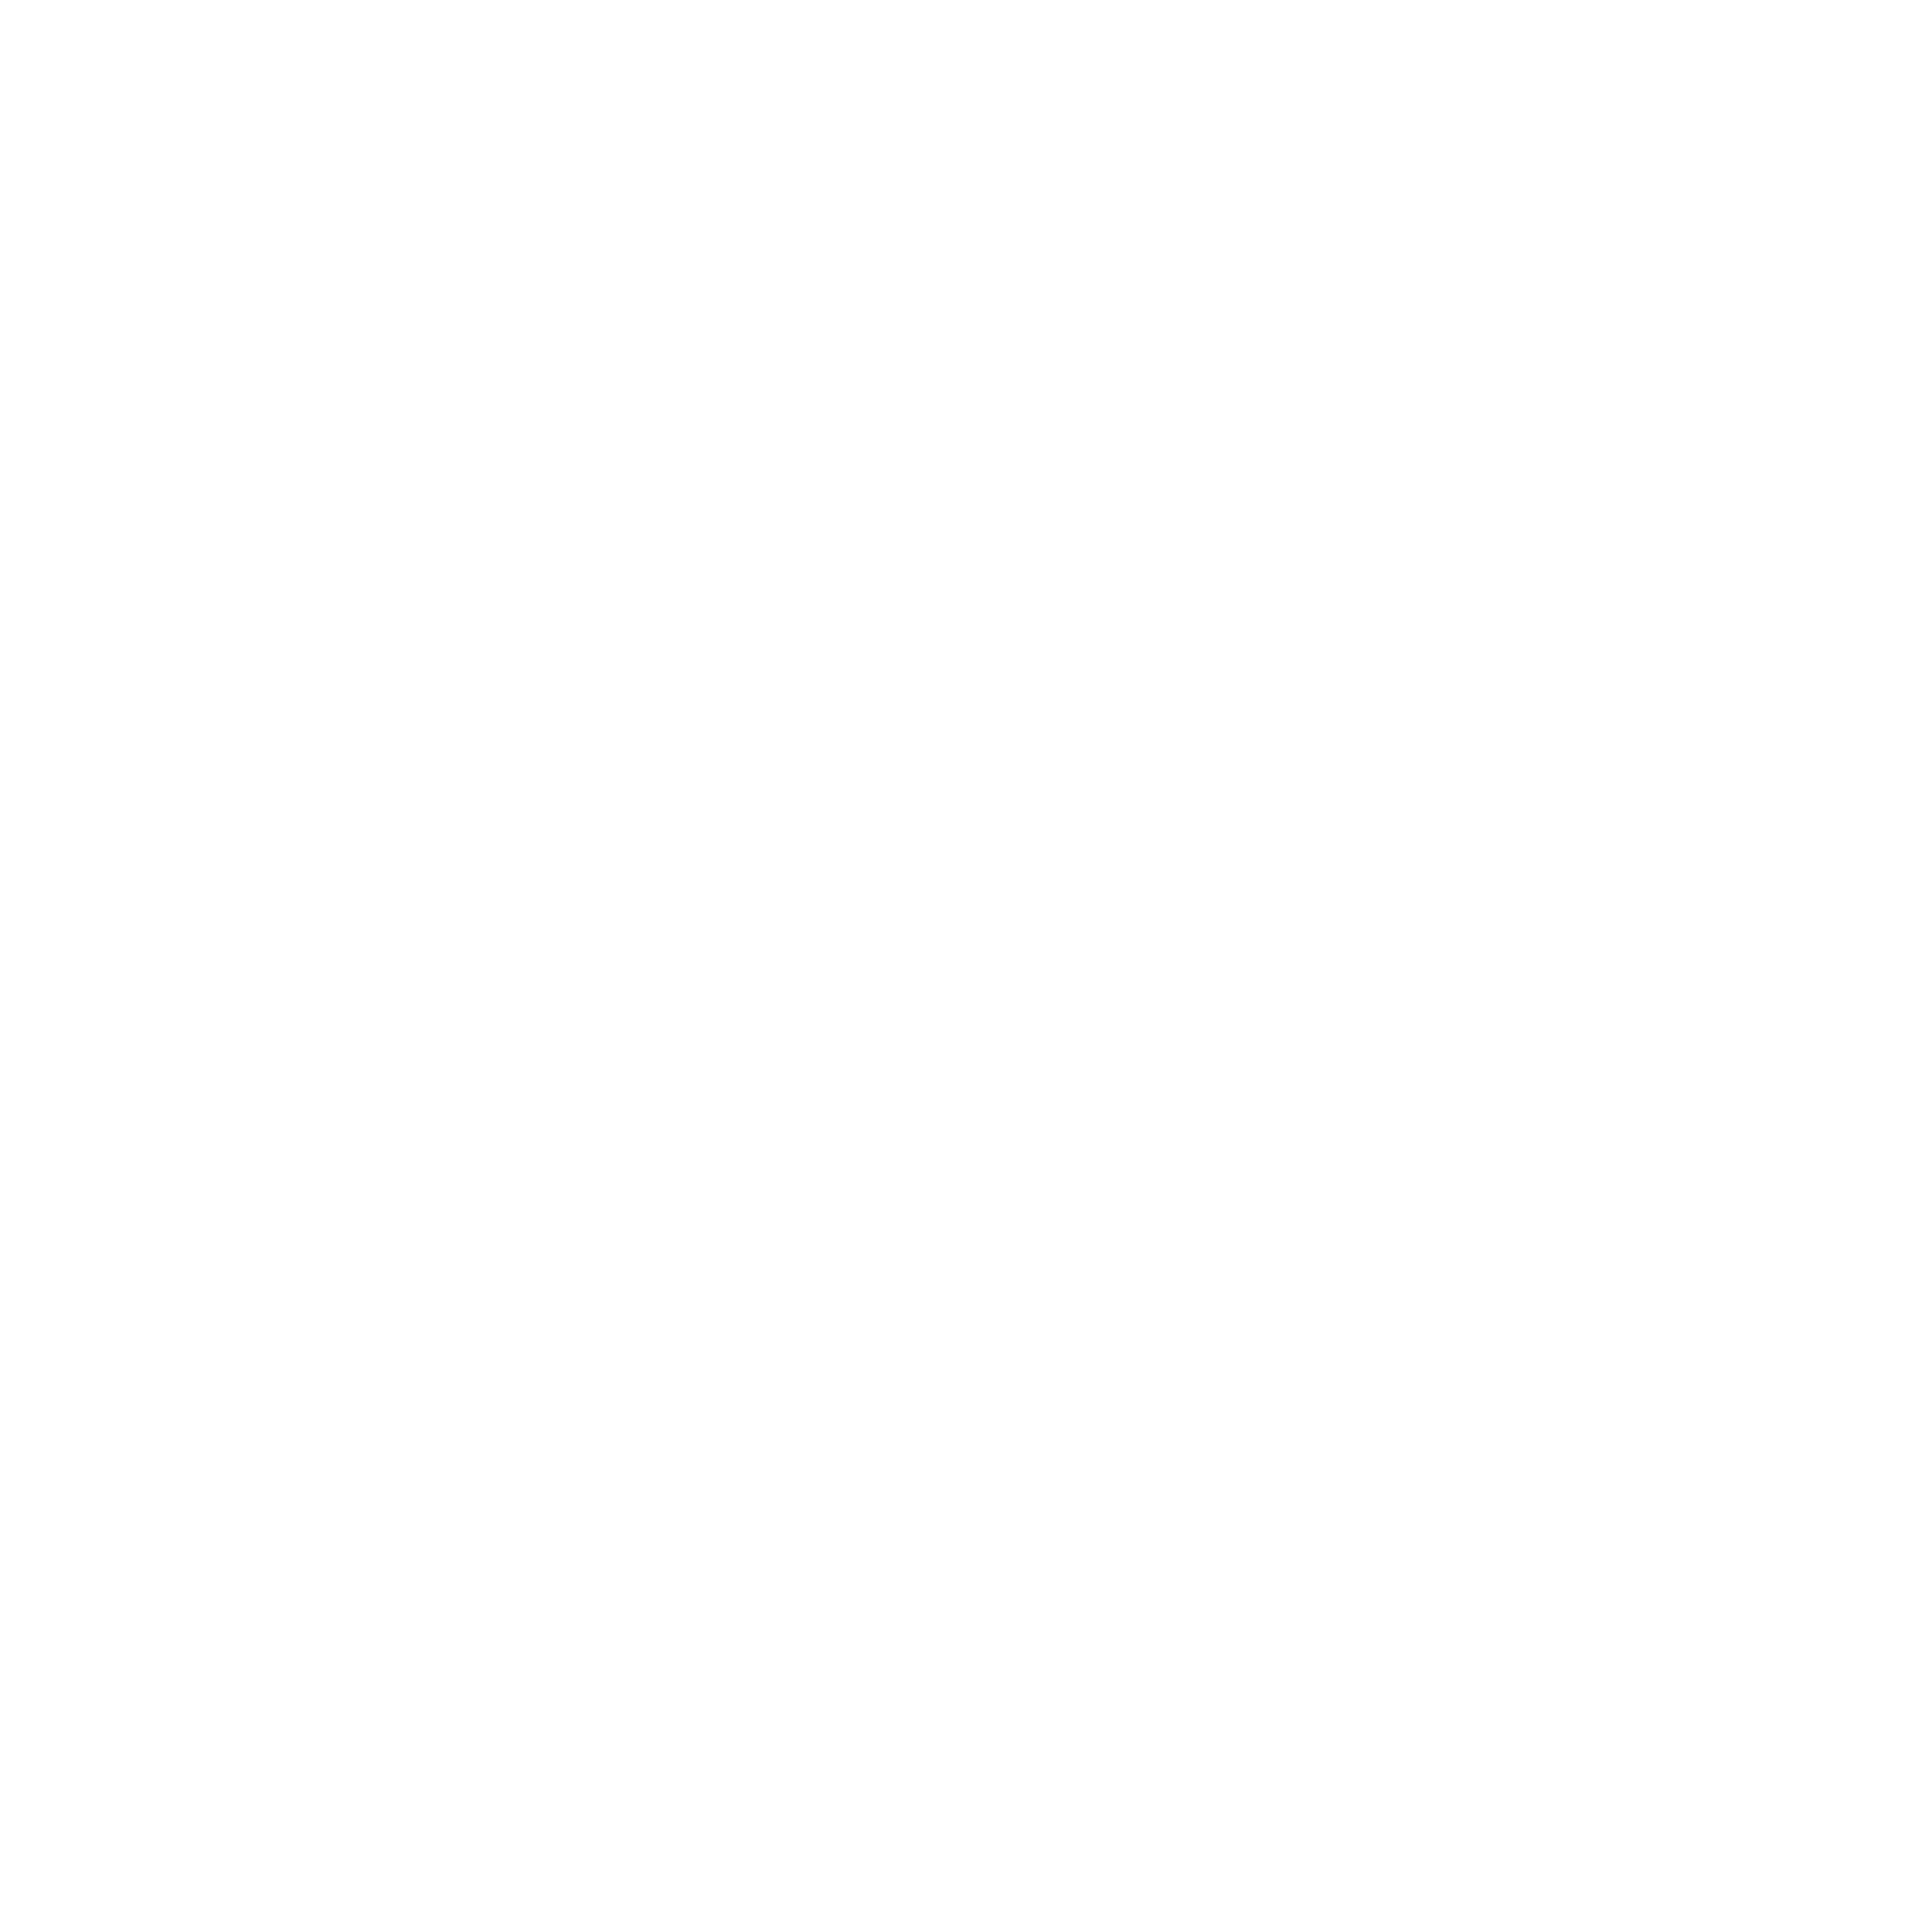 API Central Governance